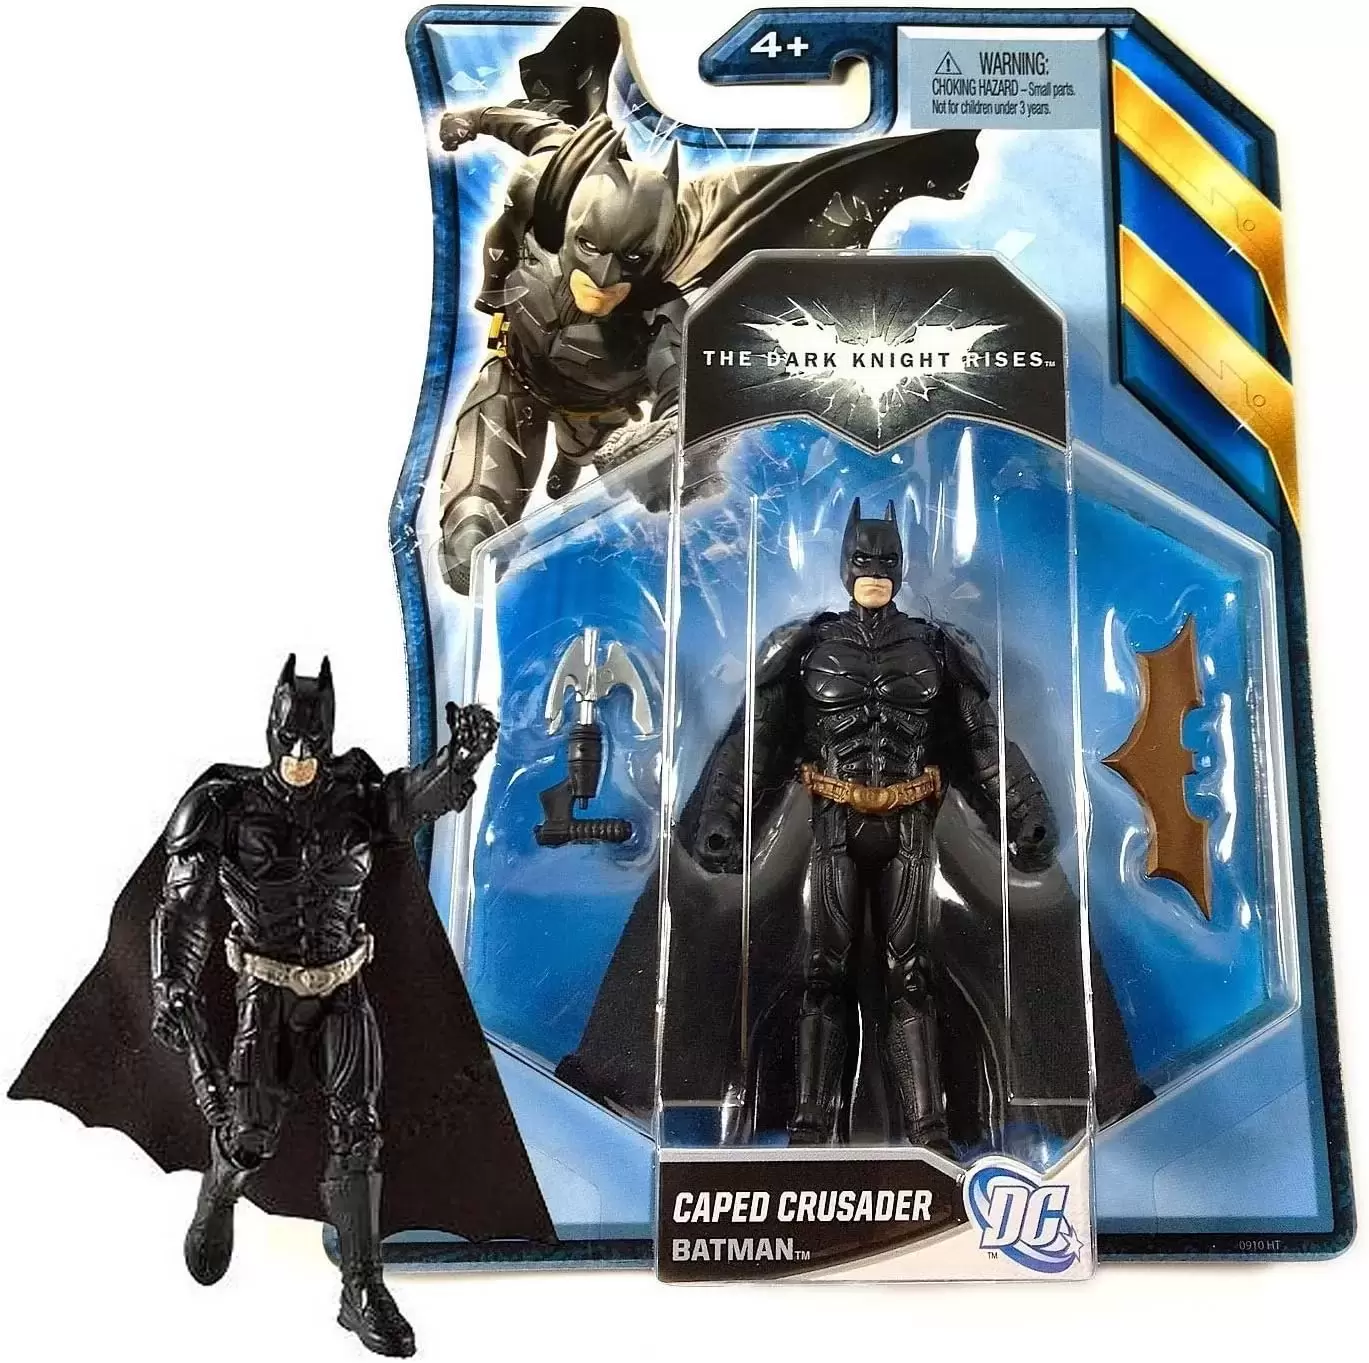 The Dark Knight Rises (Mattel) - Caped Cruisader Batman